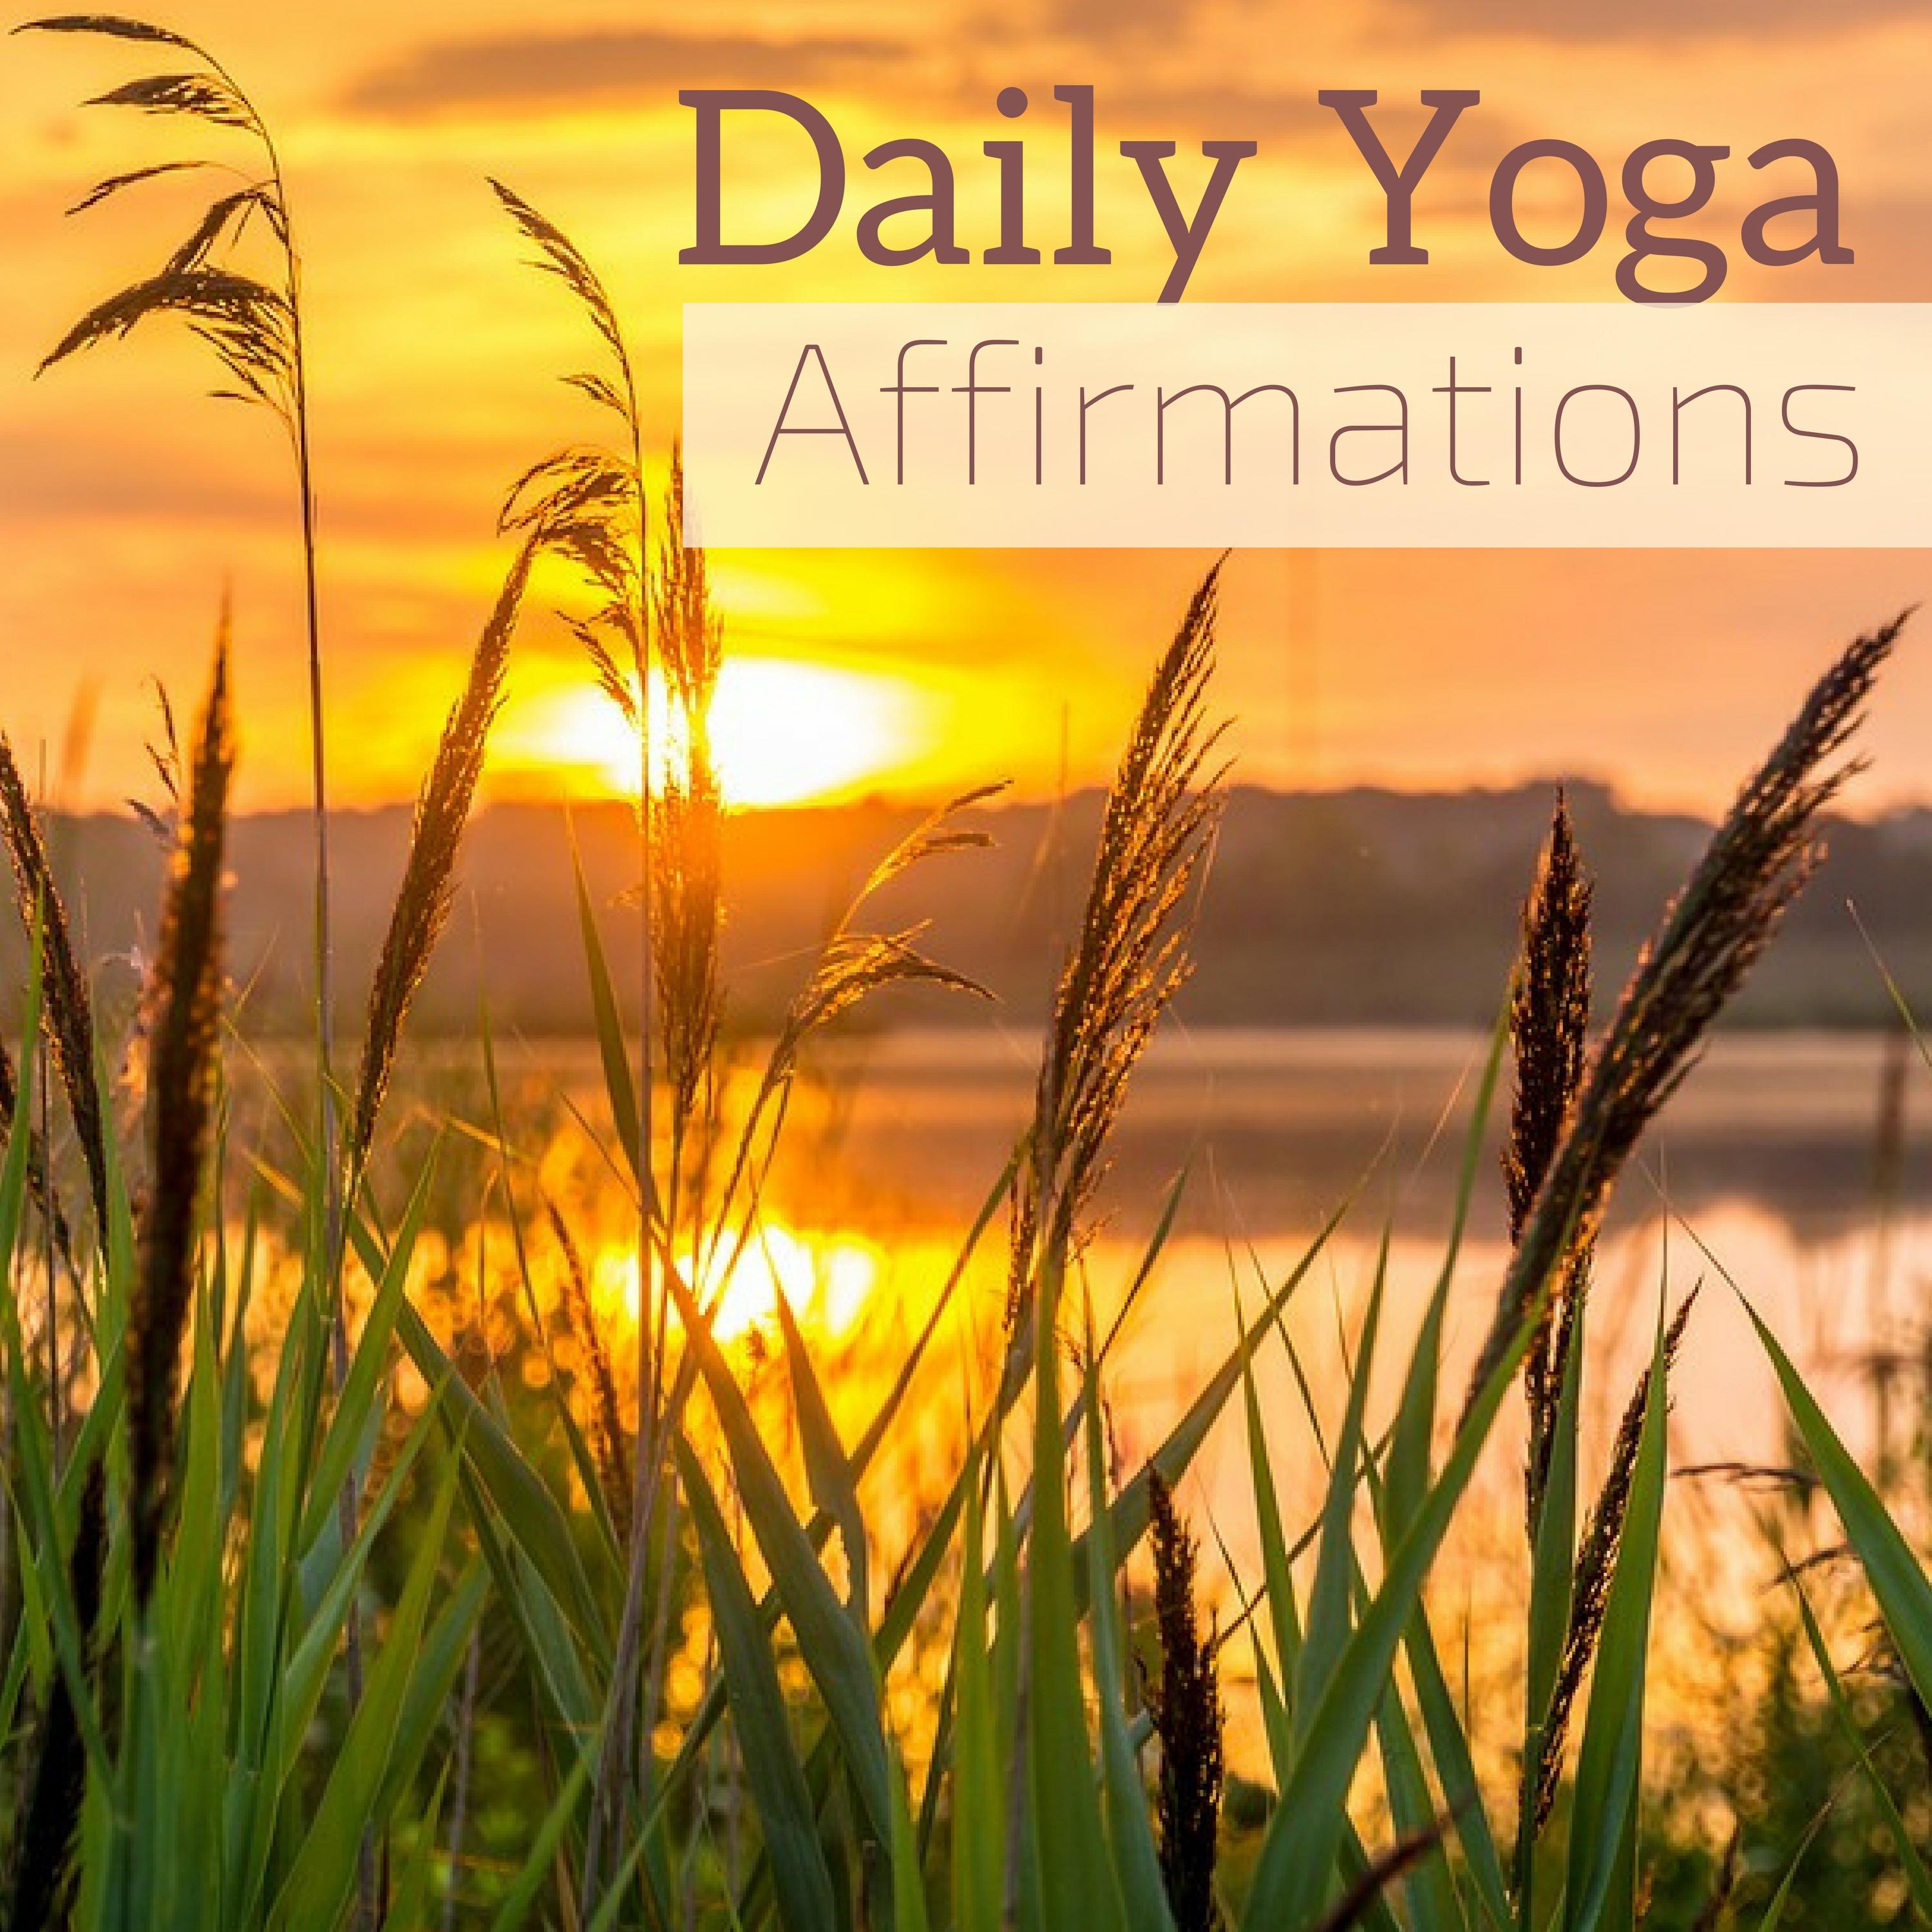 Daily Yoga Affirmations